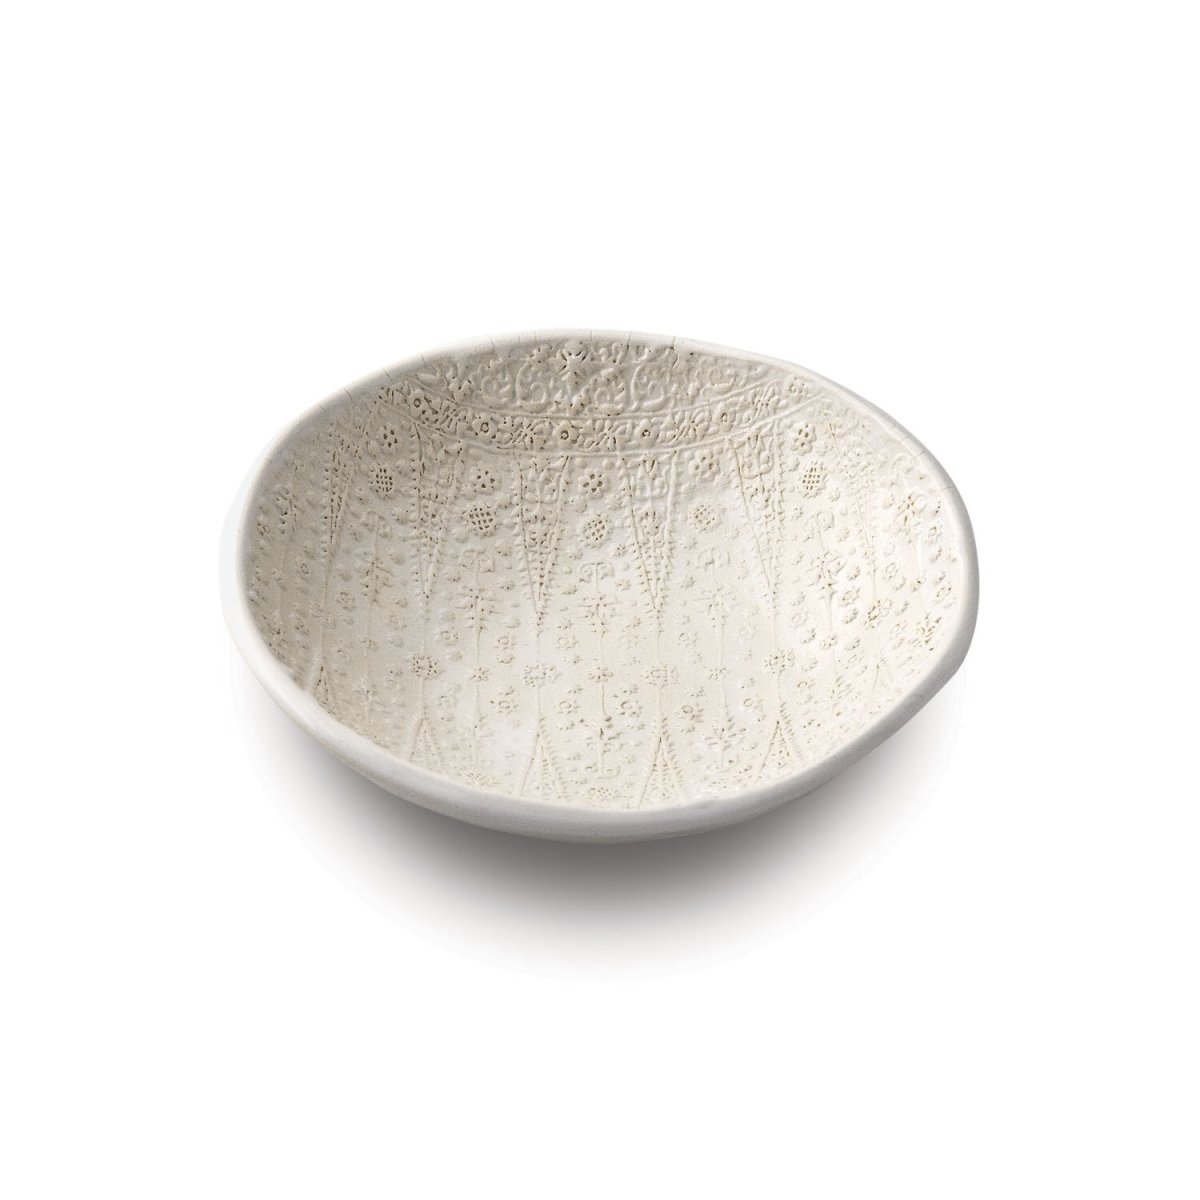 A white embossed ceramic offering bowl, handmade by ceramicist Ellen Hammen. 